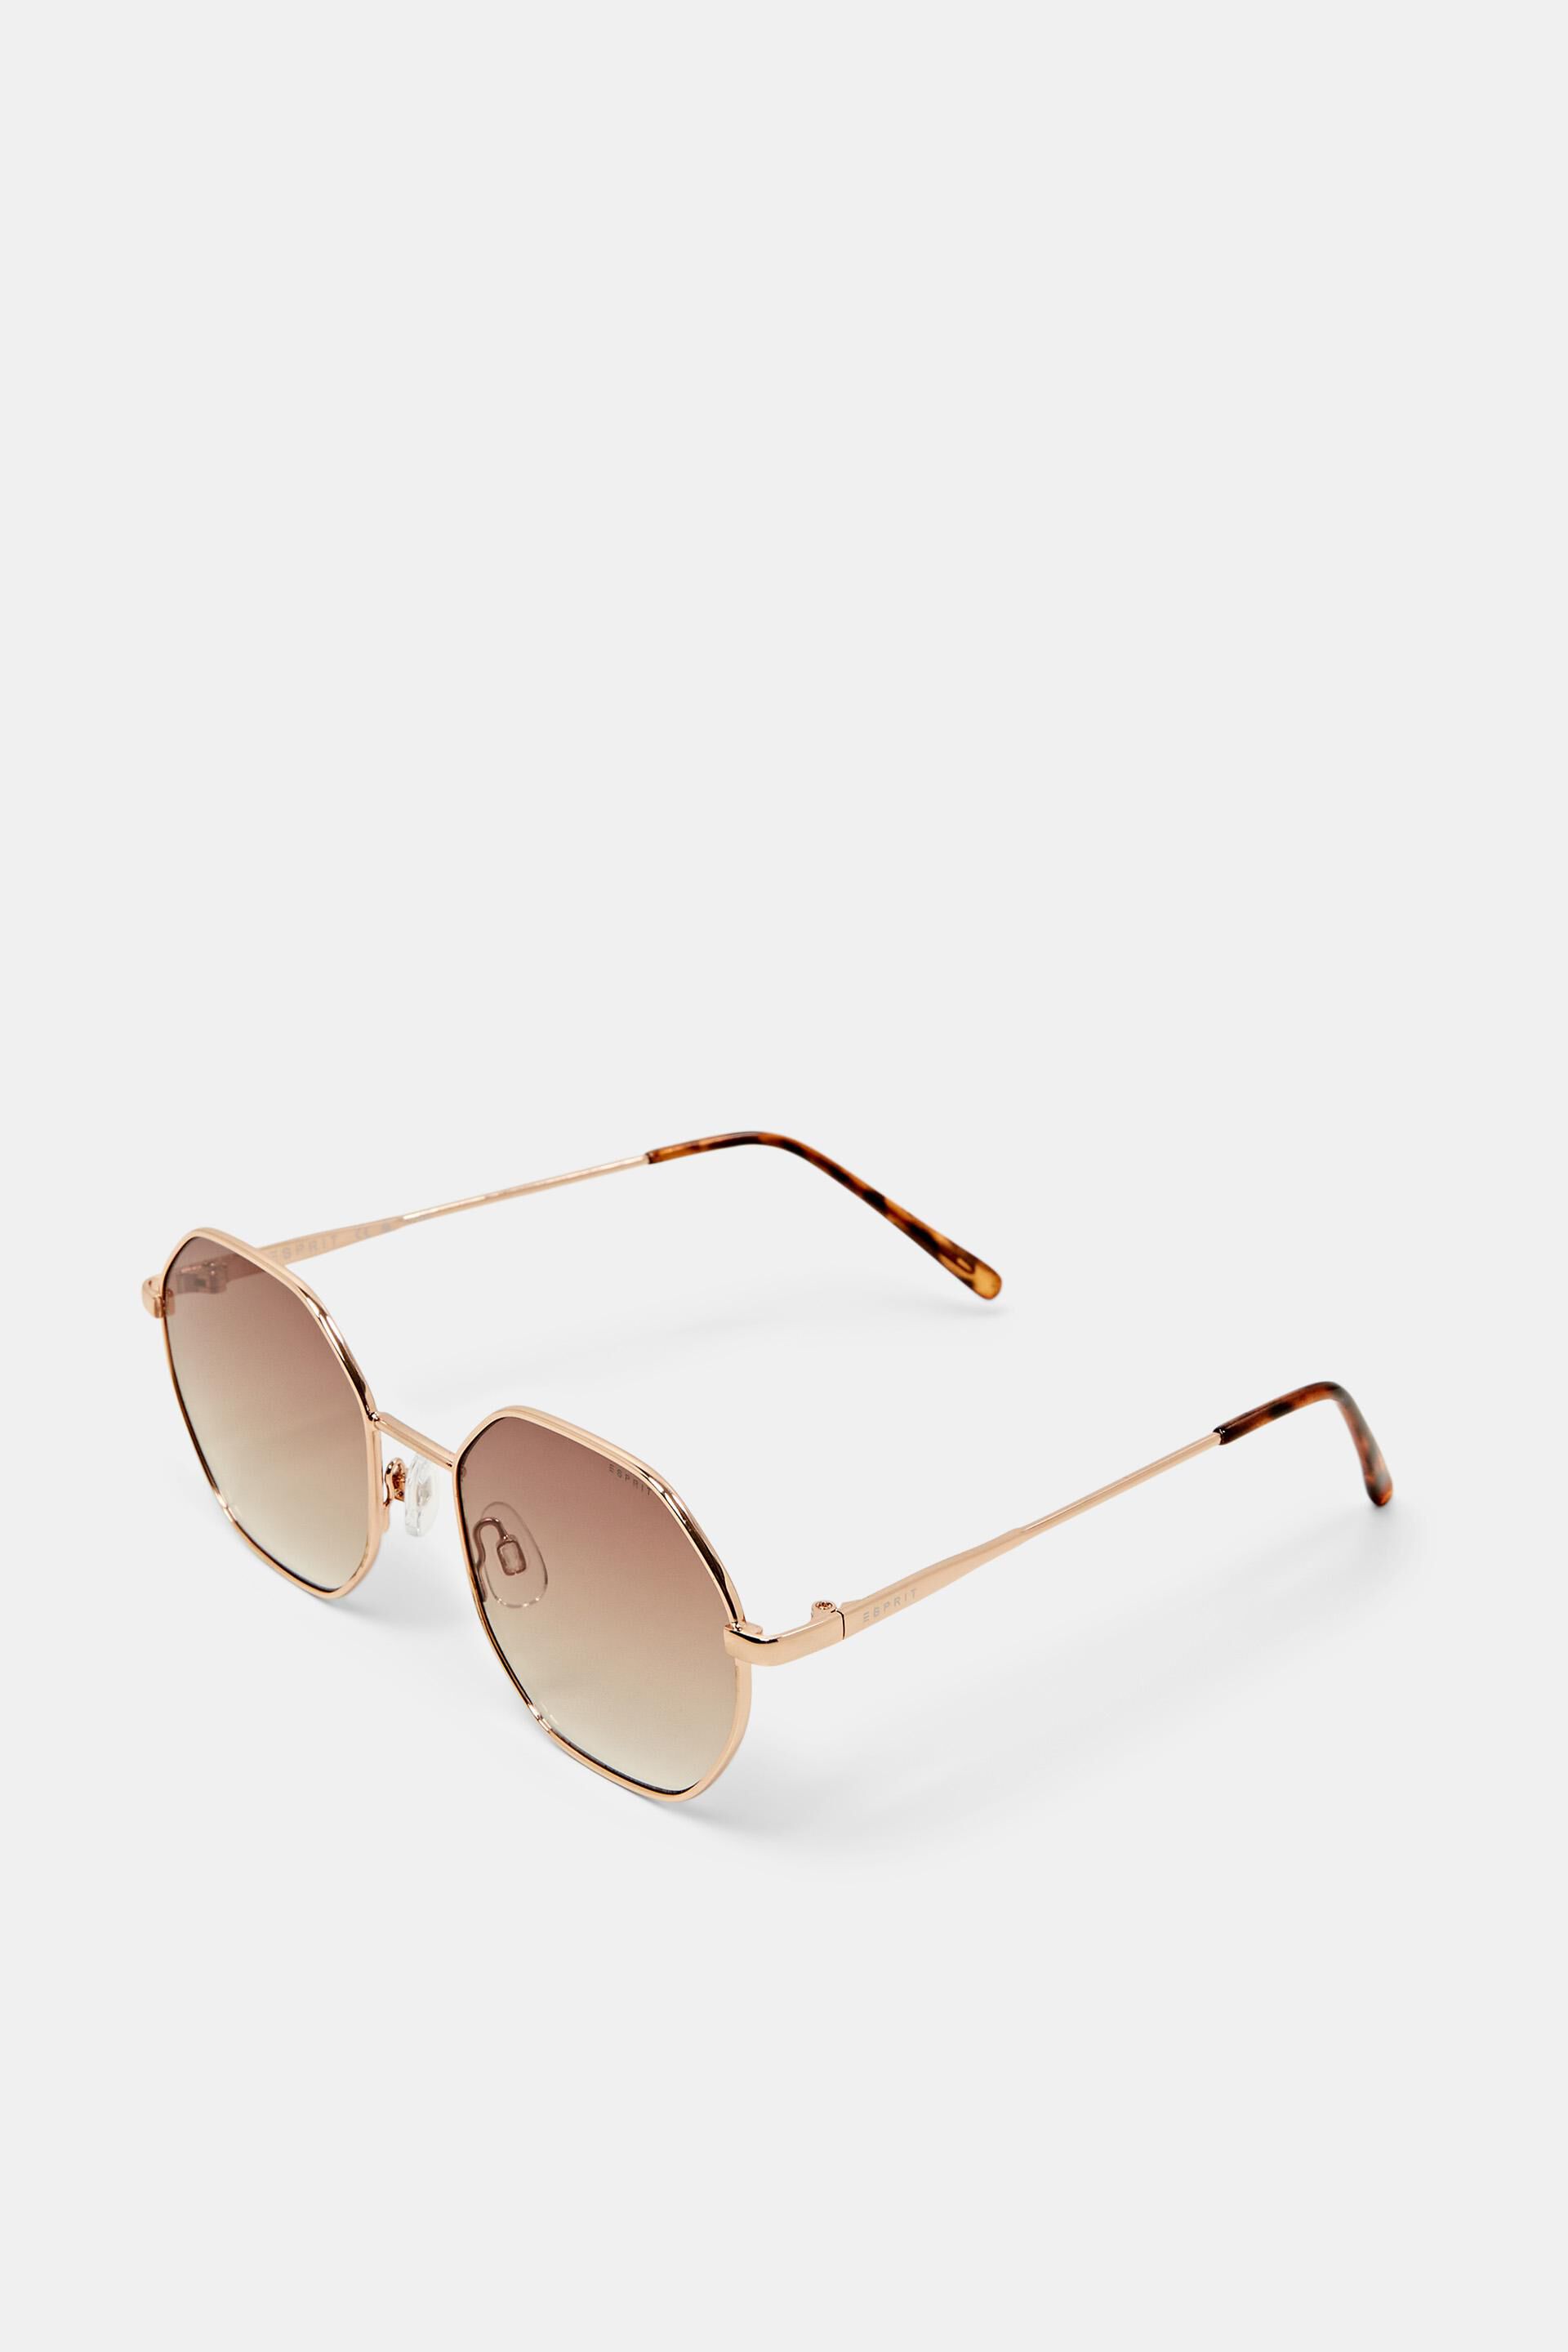 Esprit Online Store Sonnenbrille mit Metallrahmen filigranem goldfarbenem